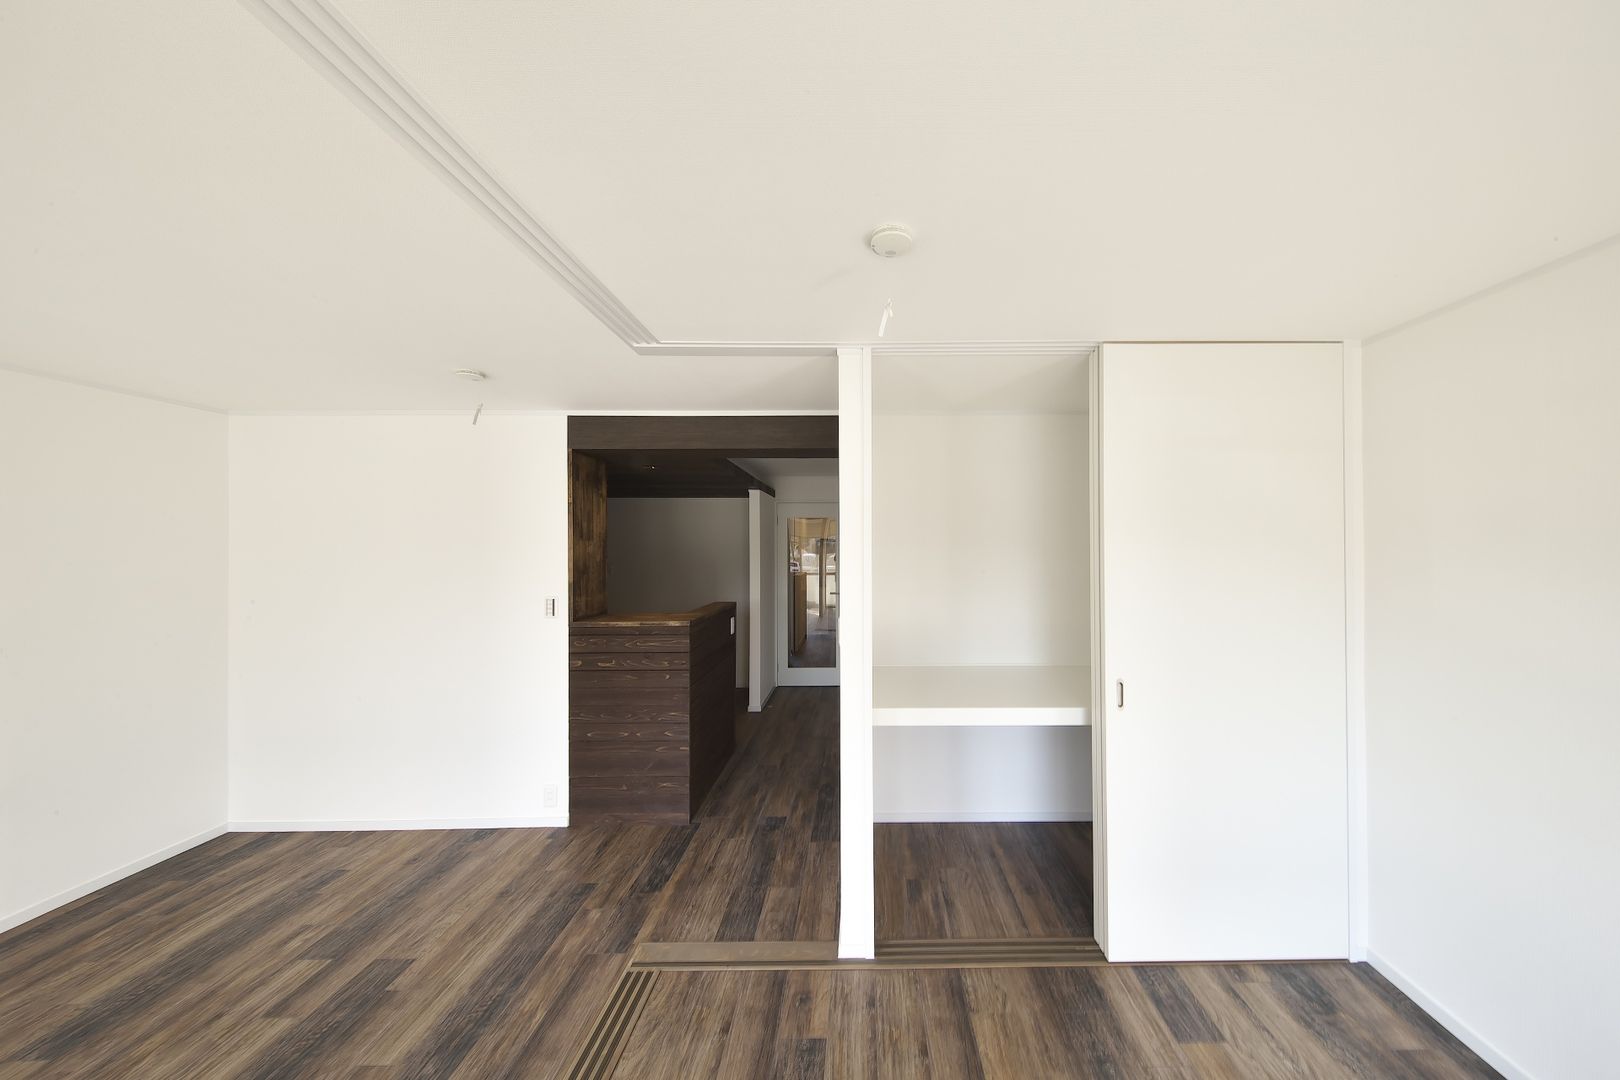 Rental apartment | renovation, FRCHIS,WORKS FRCHIS,WORKS Living room Wood Wood effect